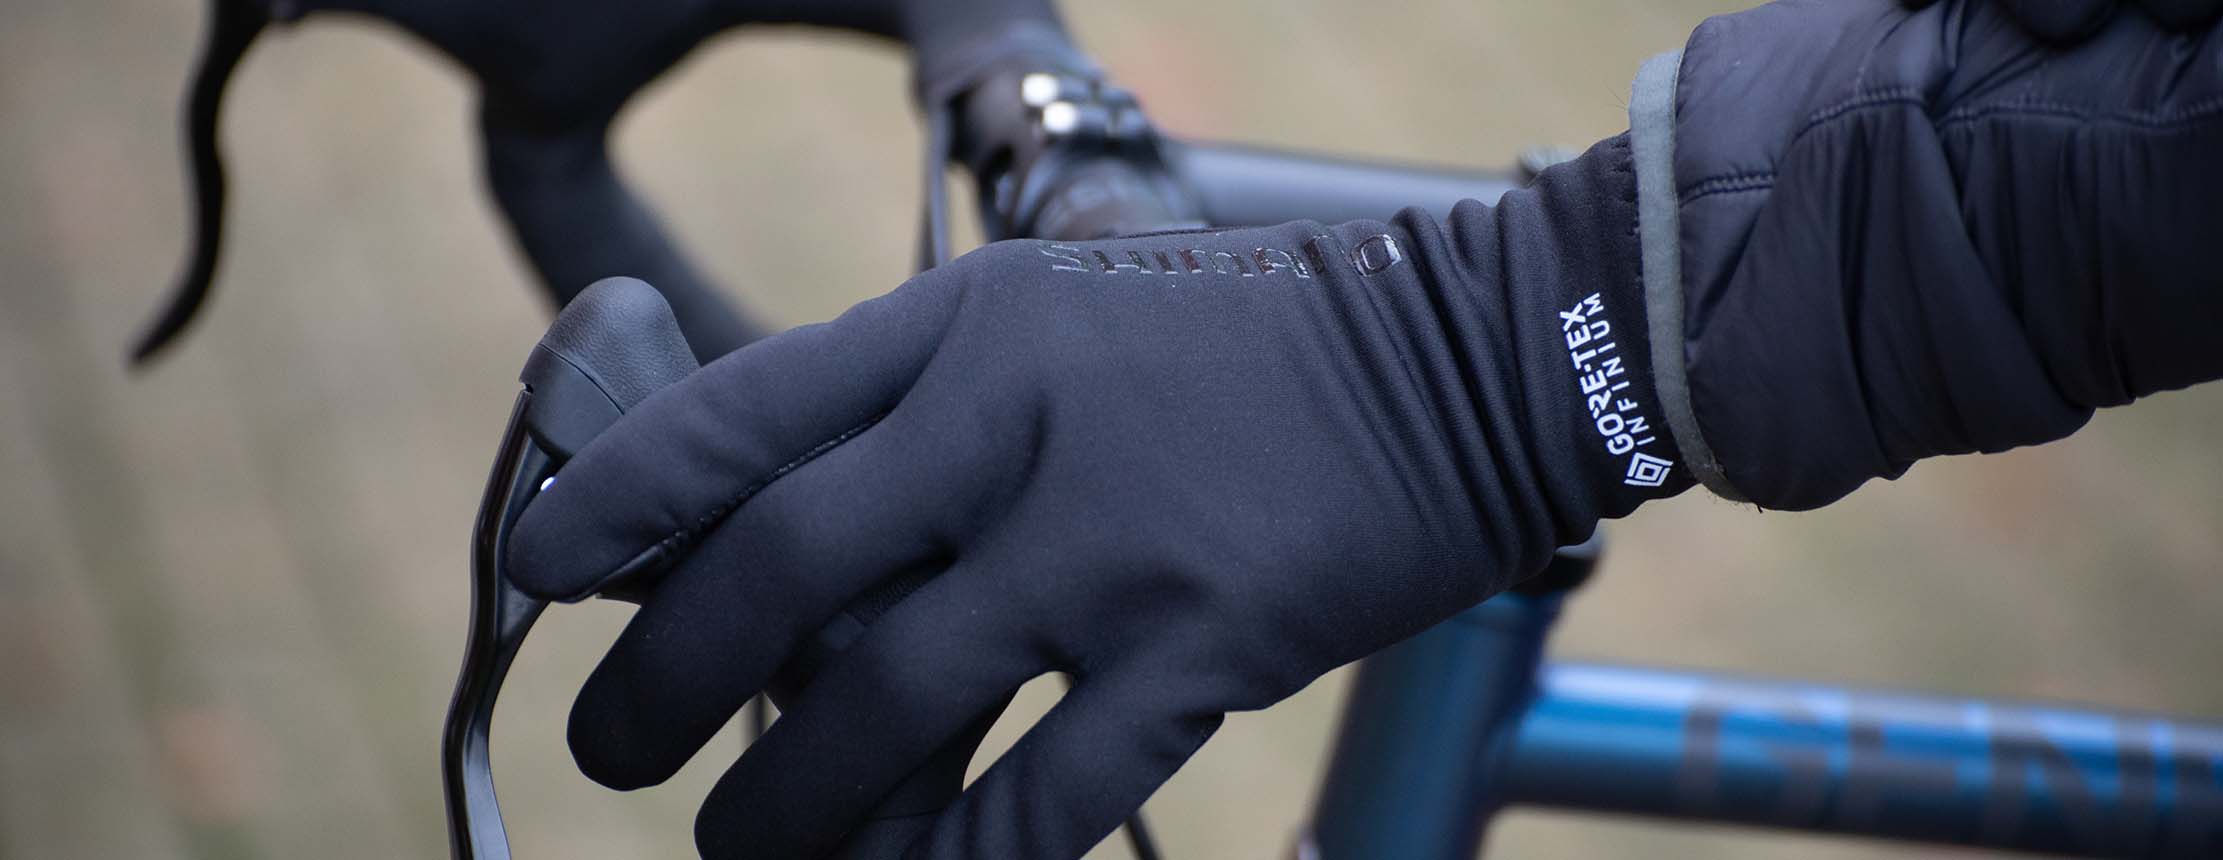 Shimano winter gloves